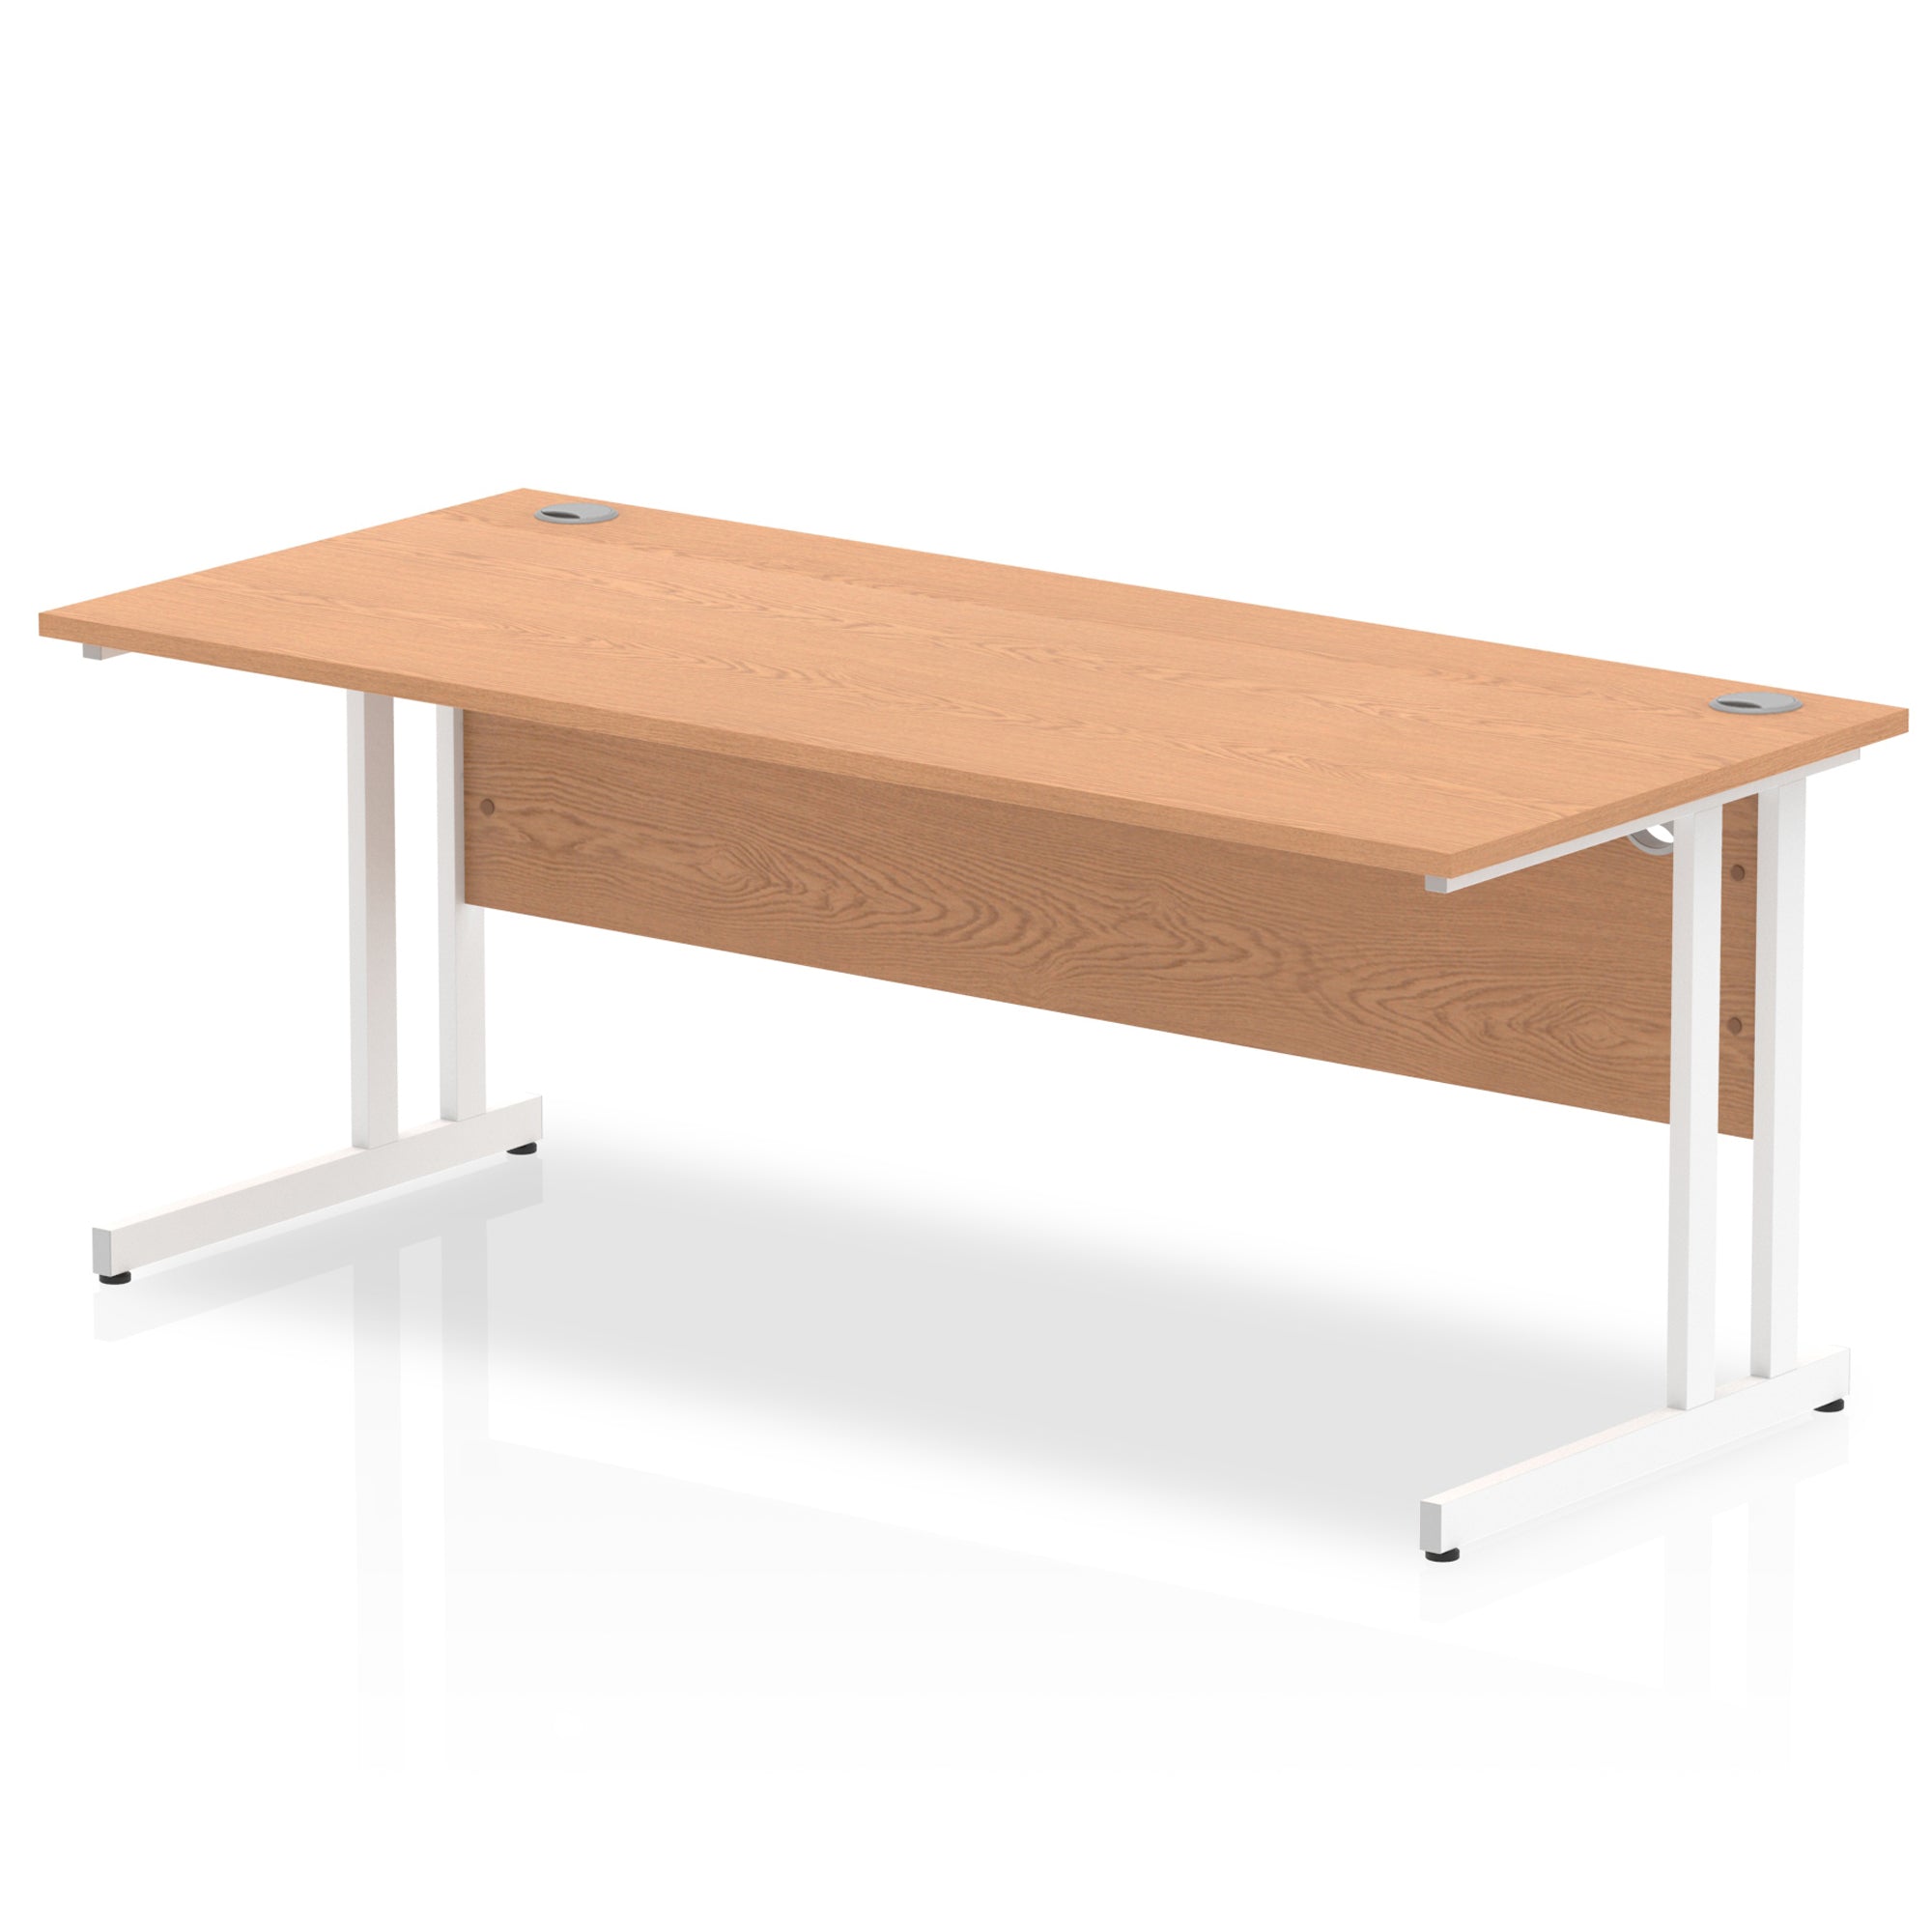 Impulse 1800mm Straight Desk Cantilever Leg - Rectangular MFC Table, 1800x800 Top, Silver/White/Black Frame, 5-Year Guarantee, Self-Assembly